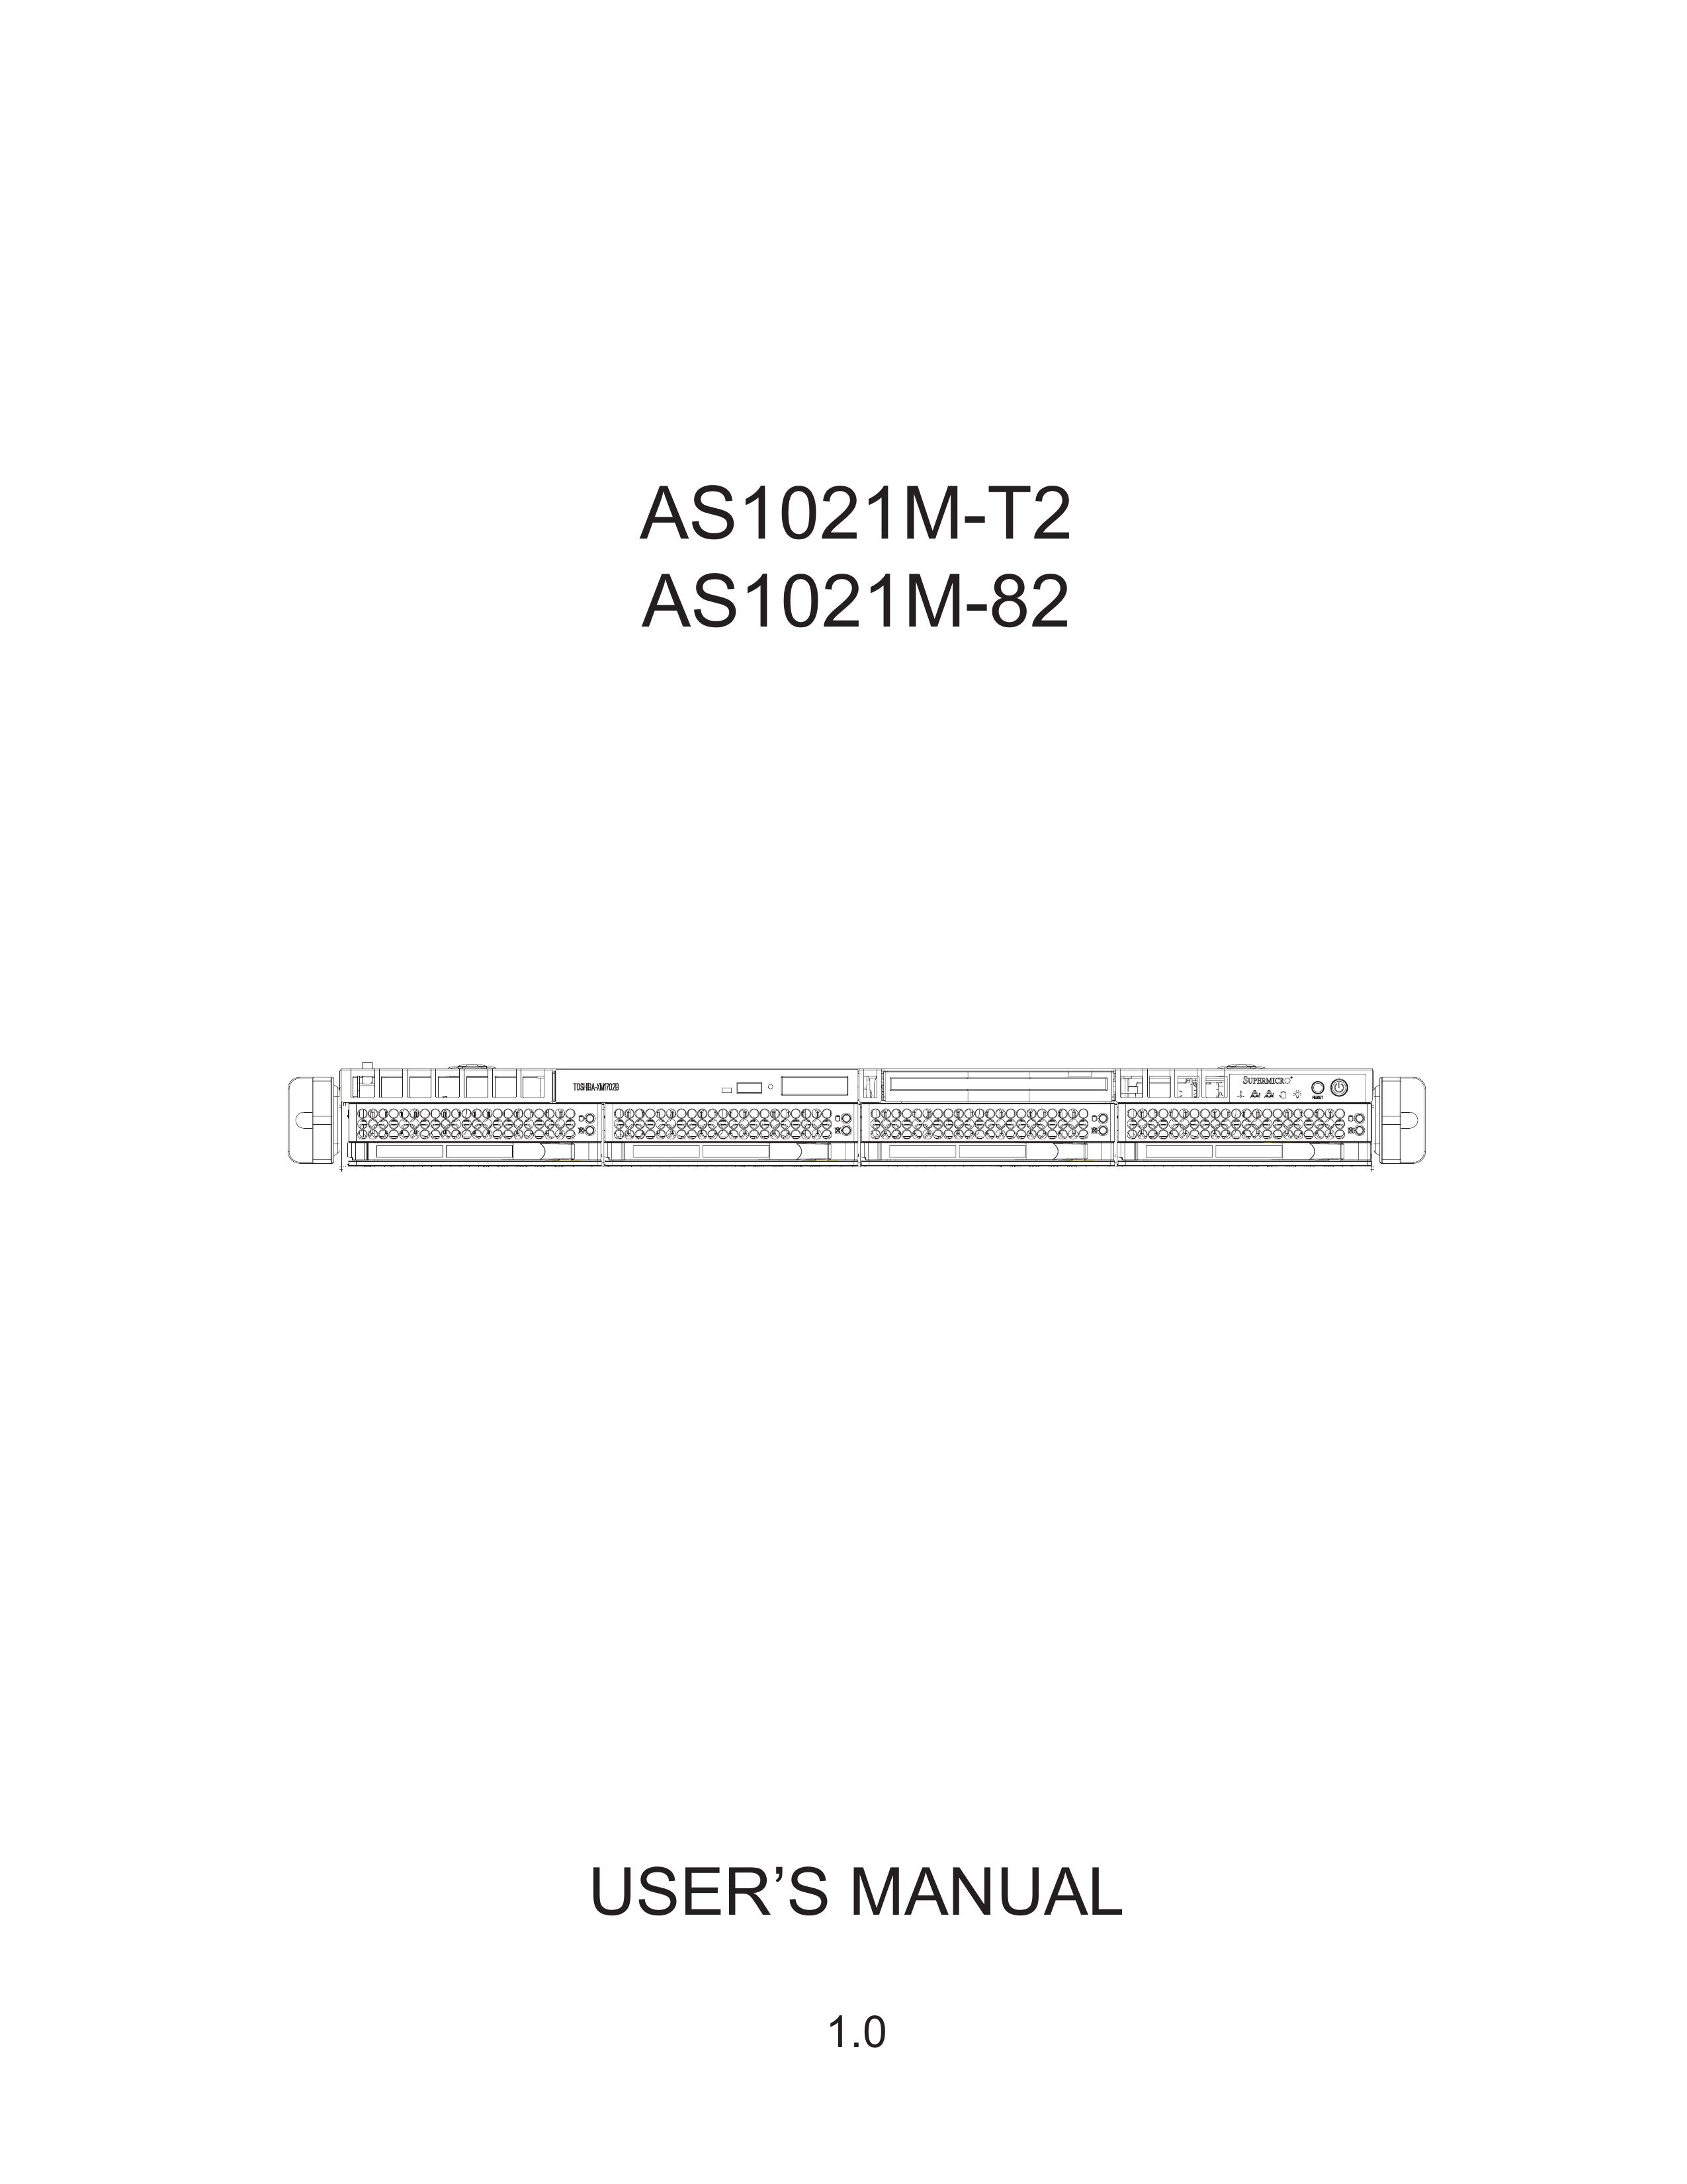 SUPER MICRO Computer AS1021M-82 Life Jacket User Manual